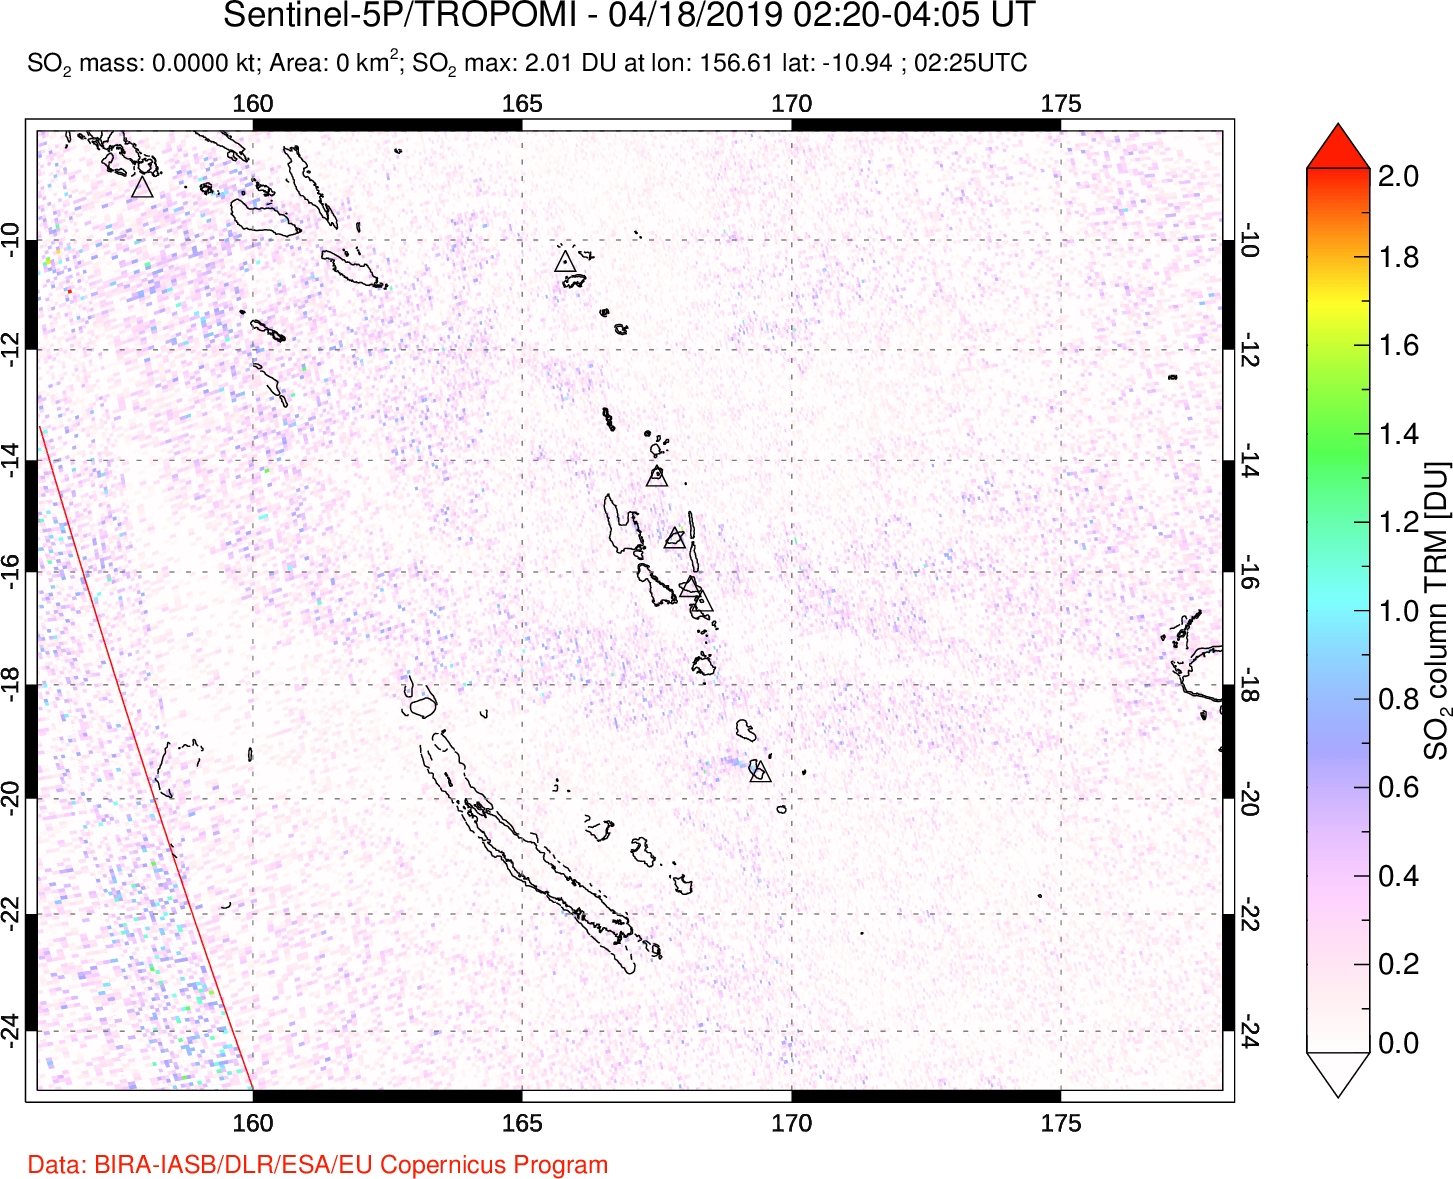 A sulfur dioxide image over Vanuatu, South Pacific on Apr 18, 2019.